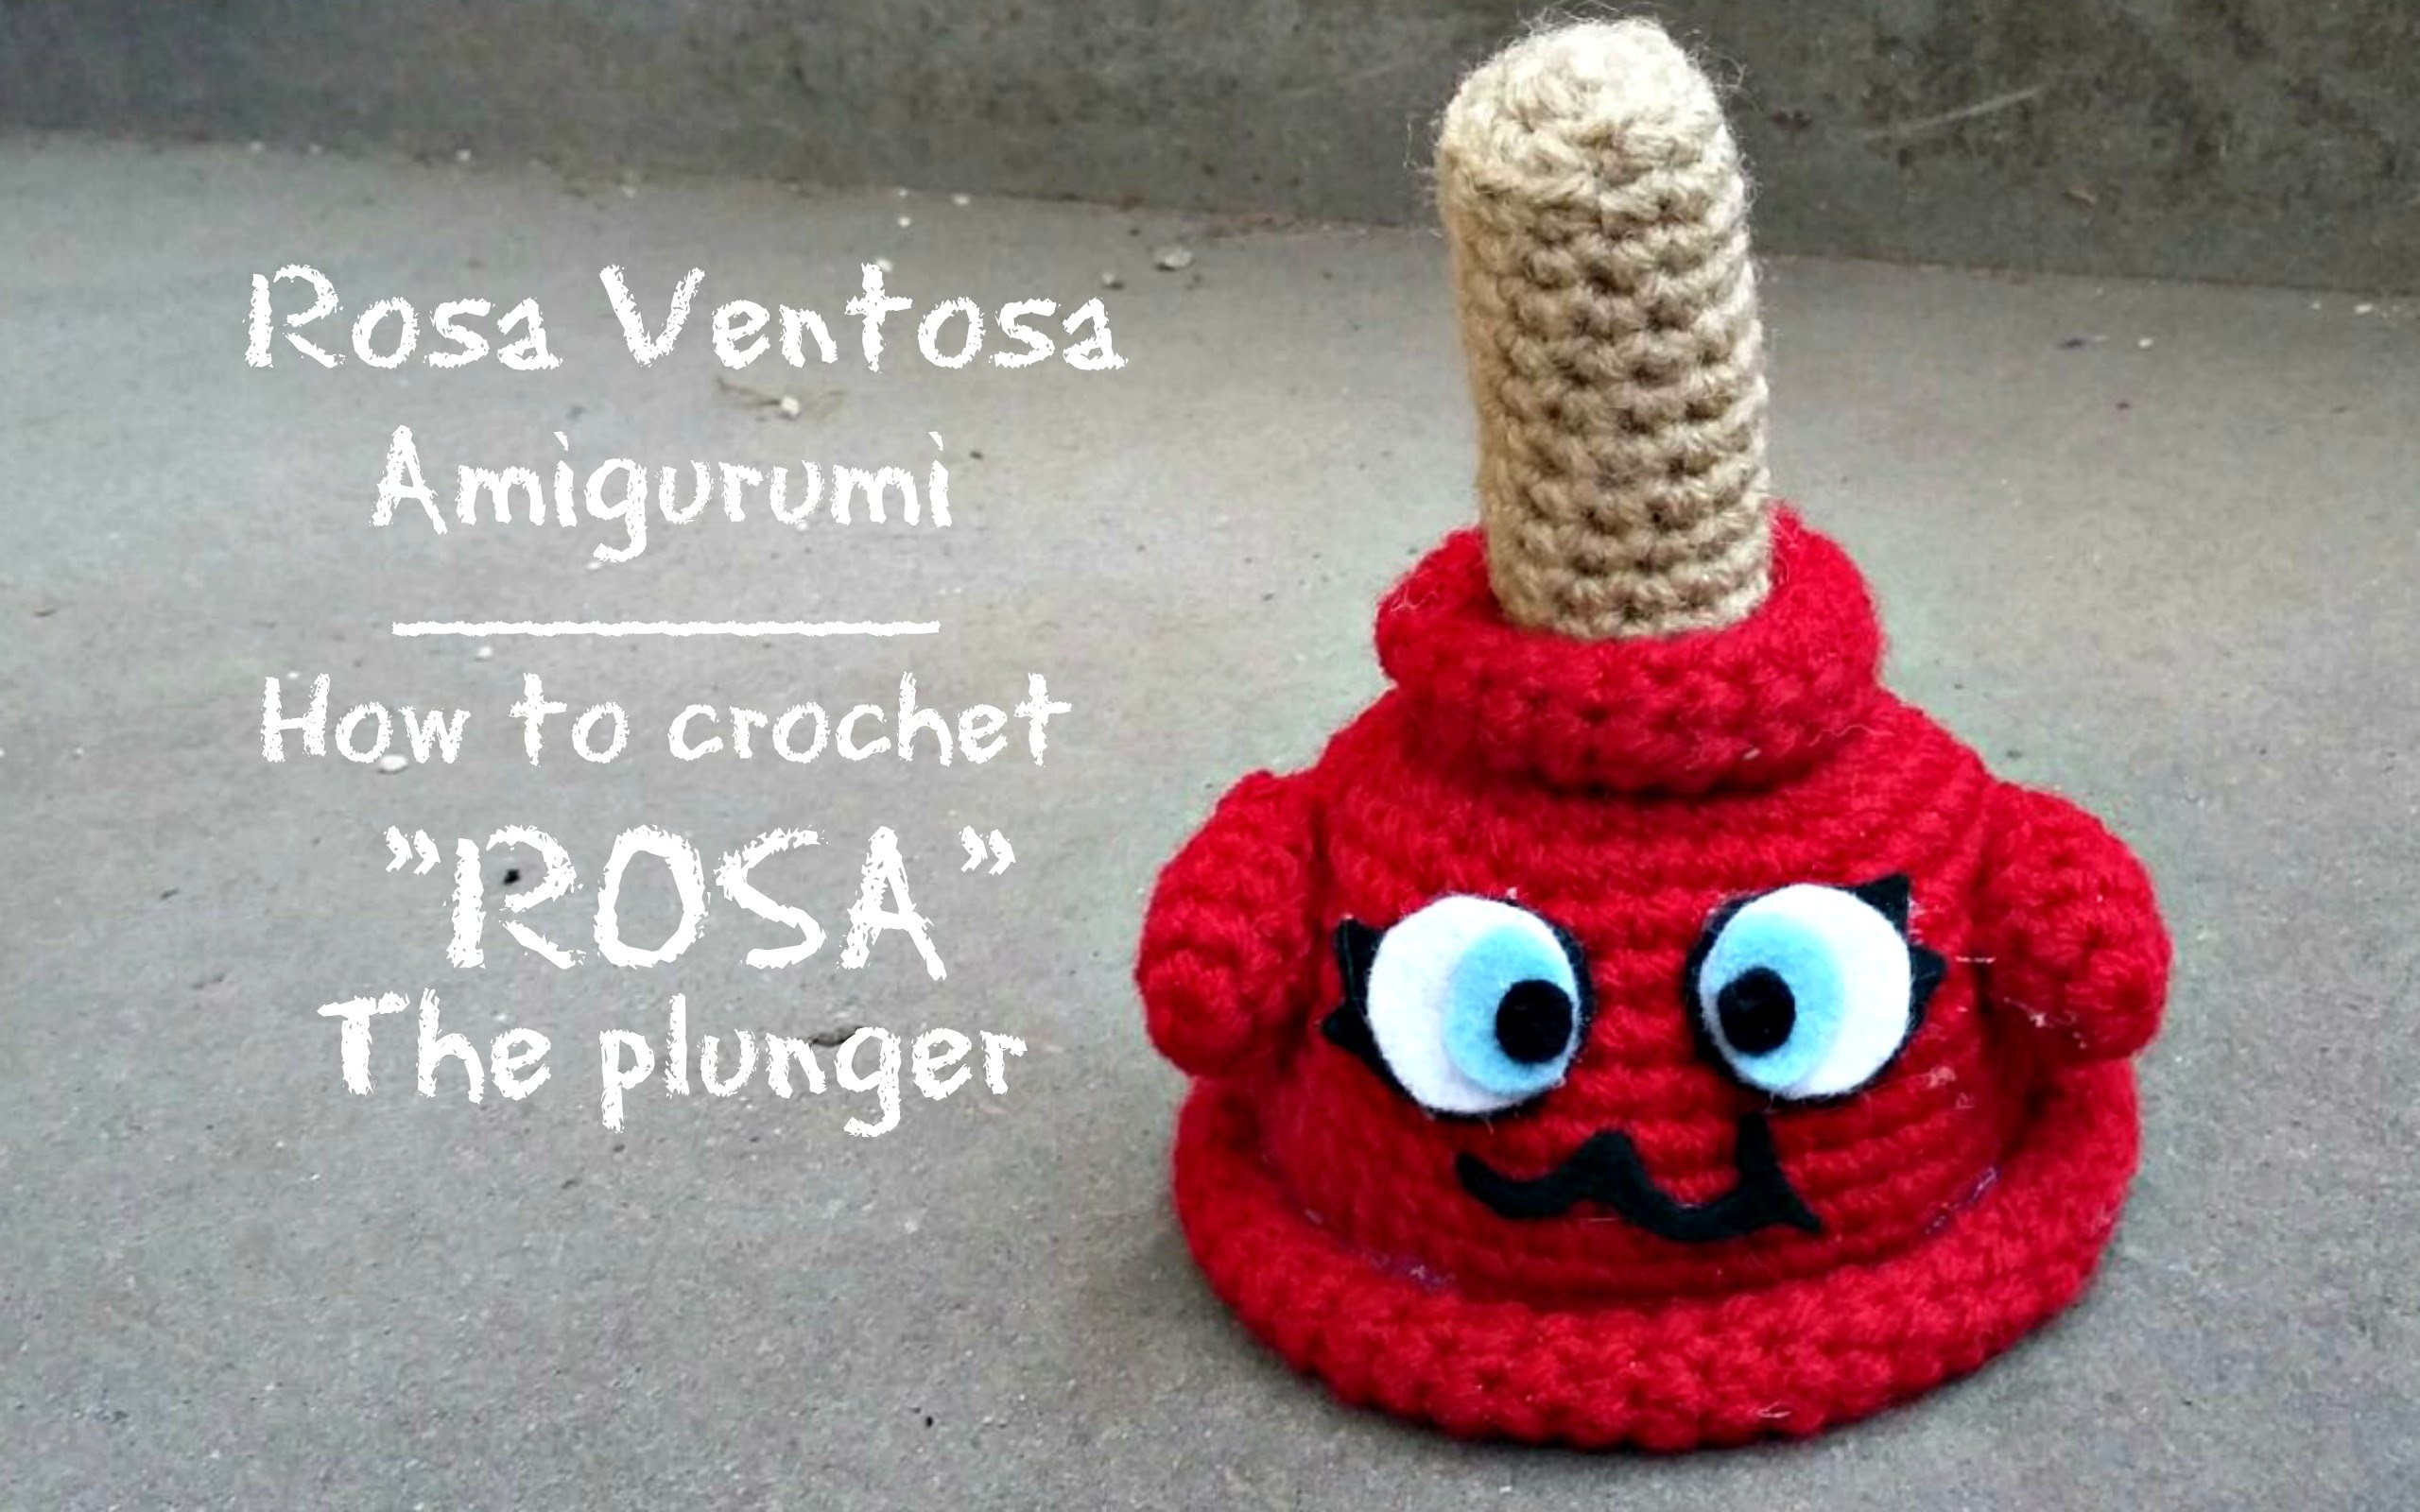 Rosa Ventosa Amigurumi [Con Aly Crafty] | How to crochet "Rosa" the plunger